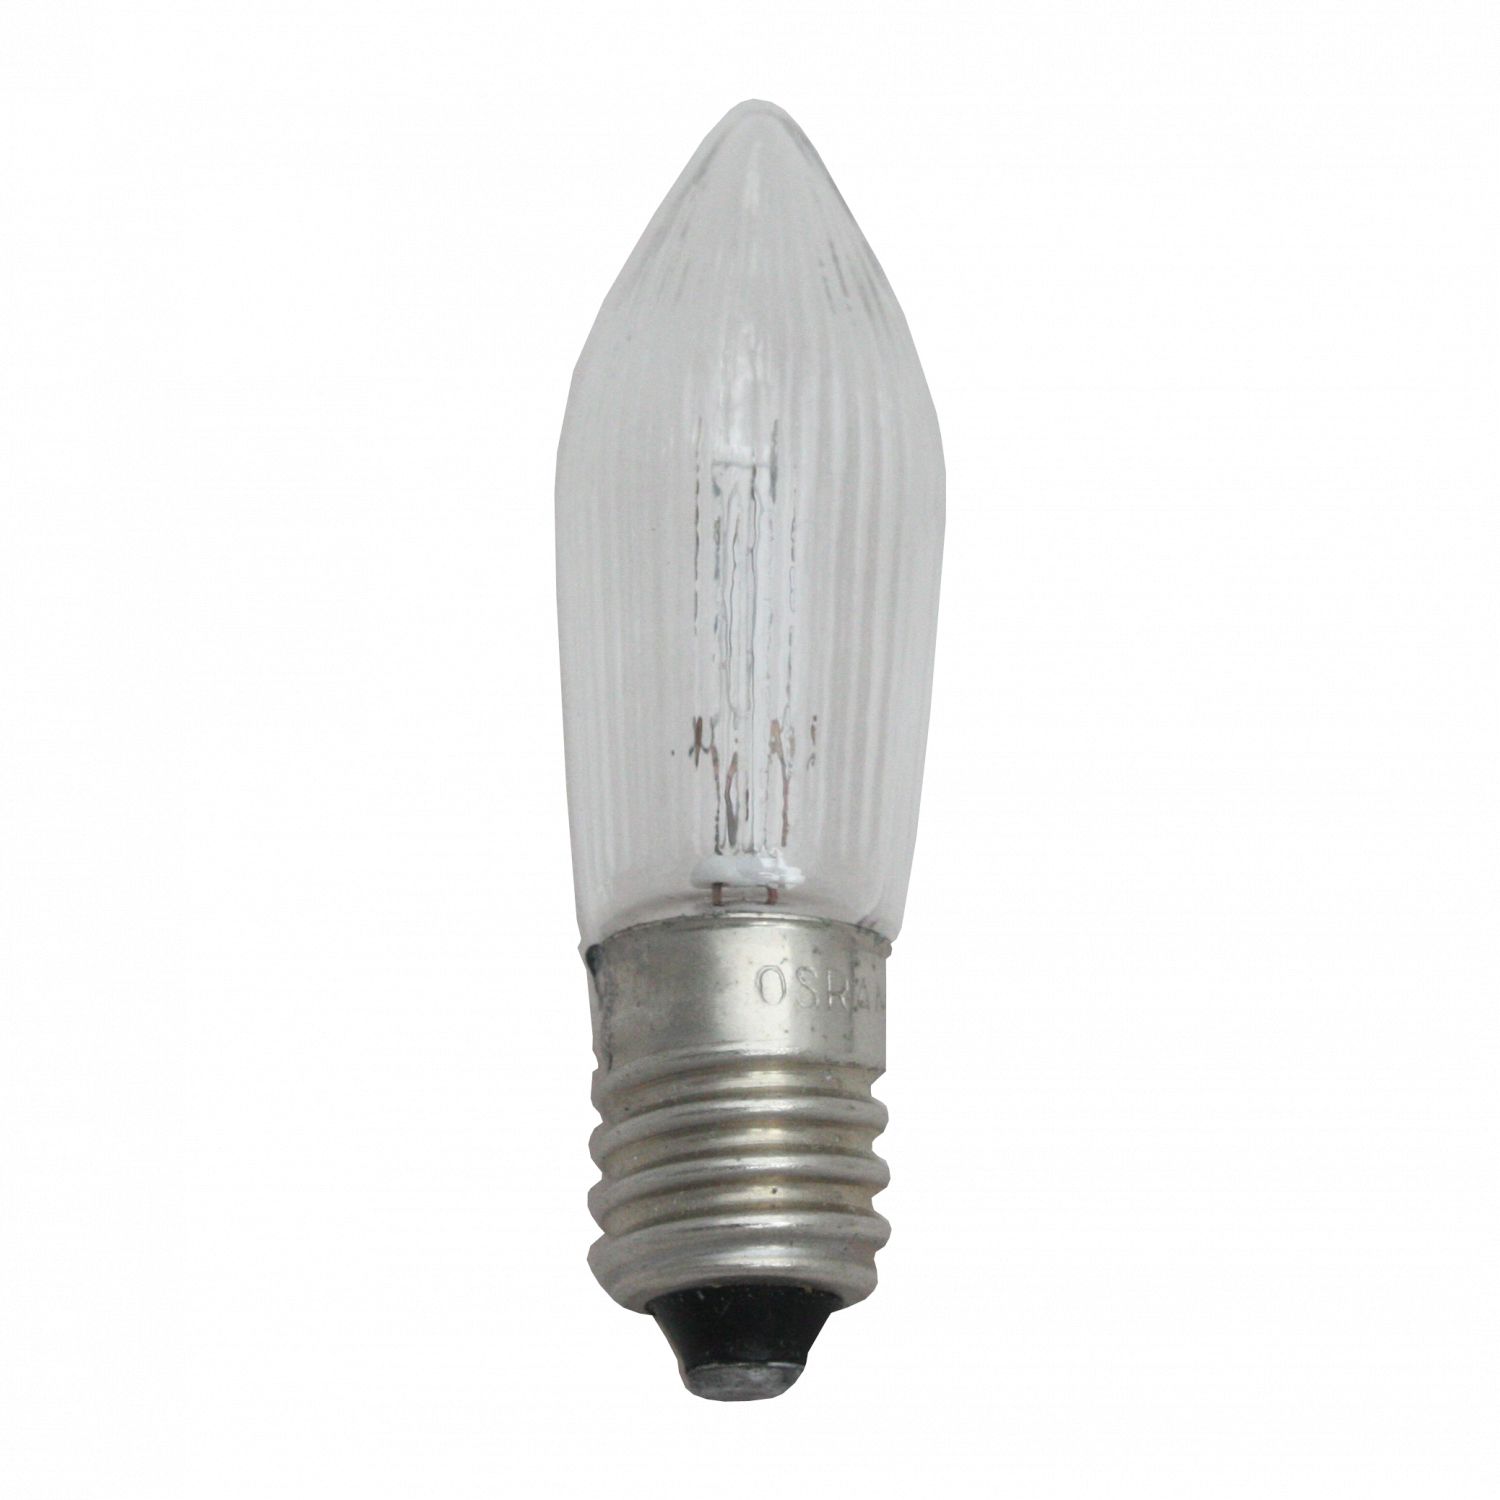 Short Screw Thread Bulb, 34V/3W/E10, Height 1.5 (40mm)